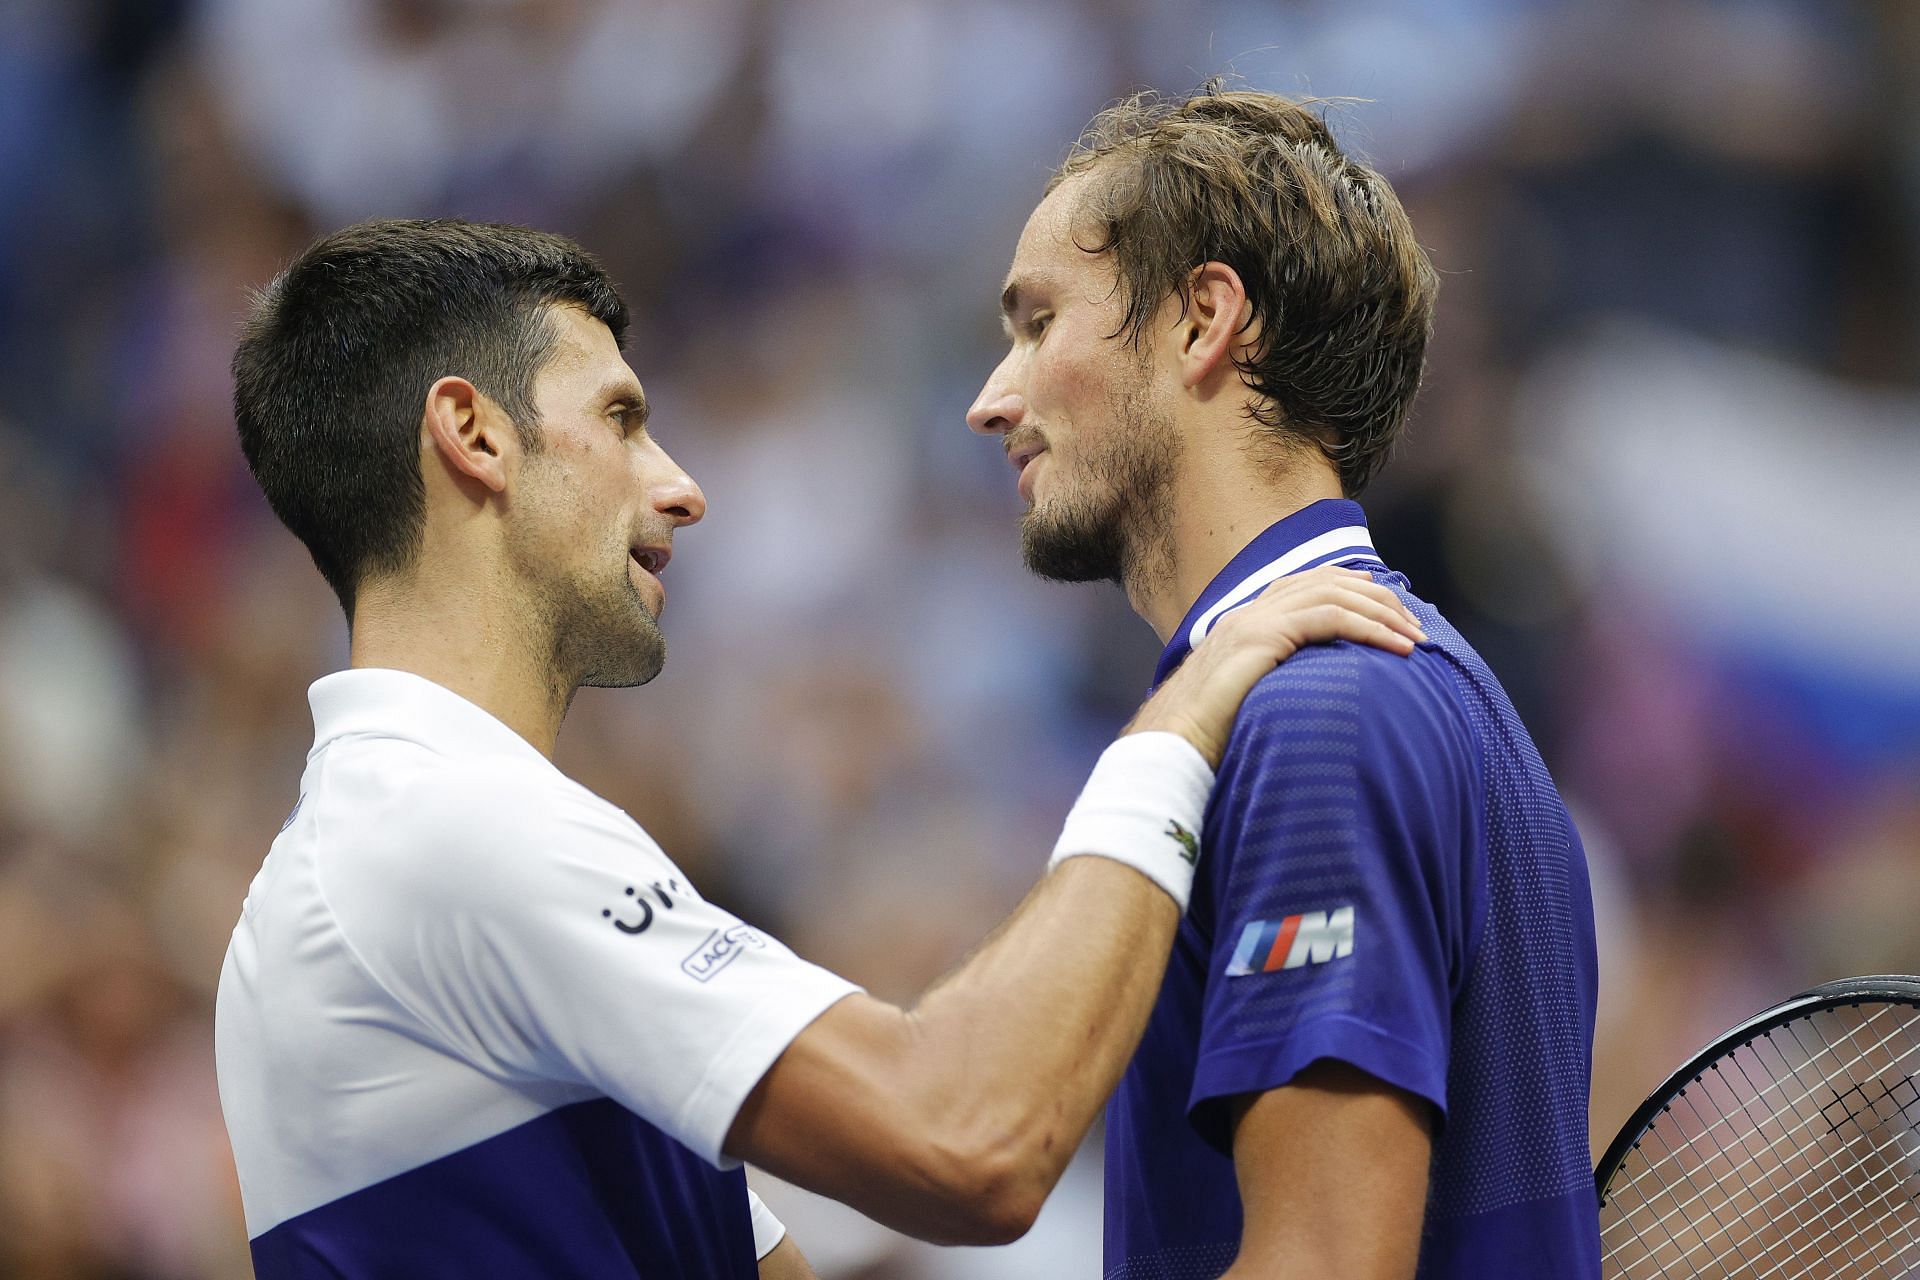 Novak Djokovic and Daniil Medvedev after the 2021 US Open final